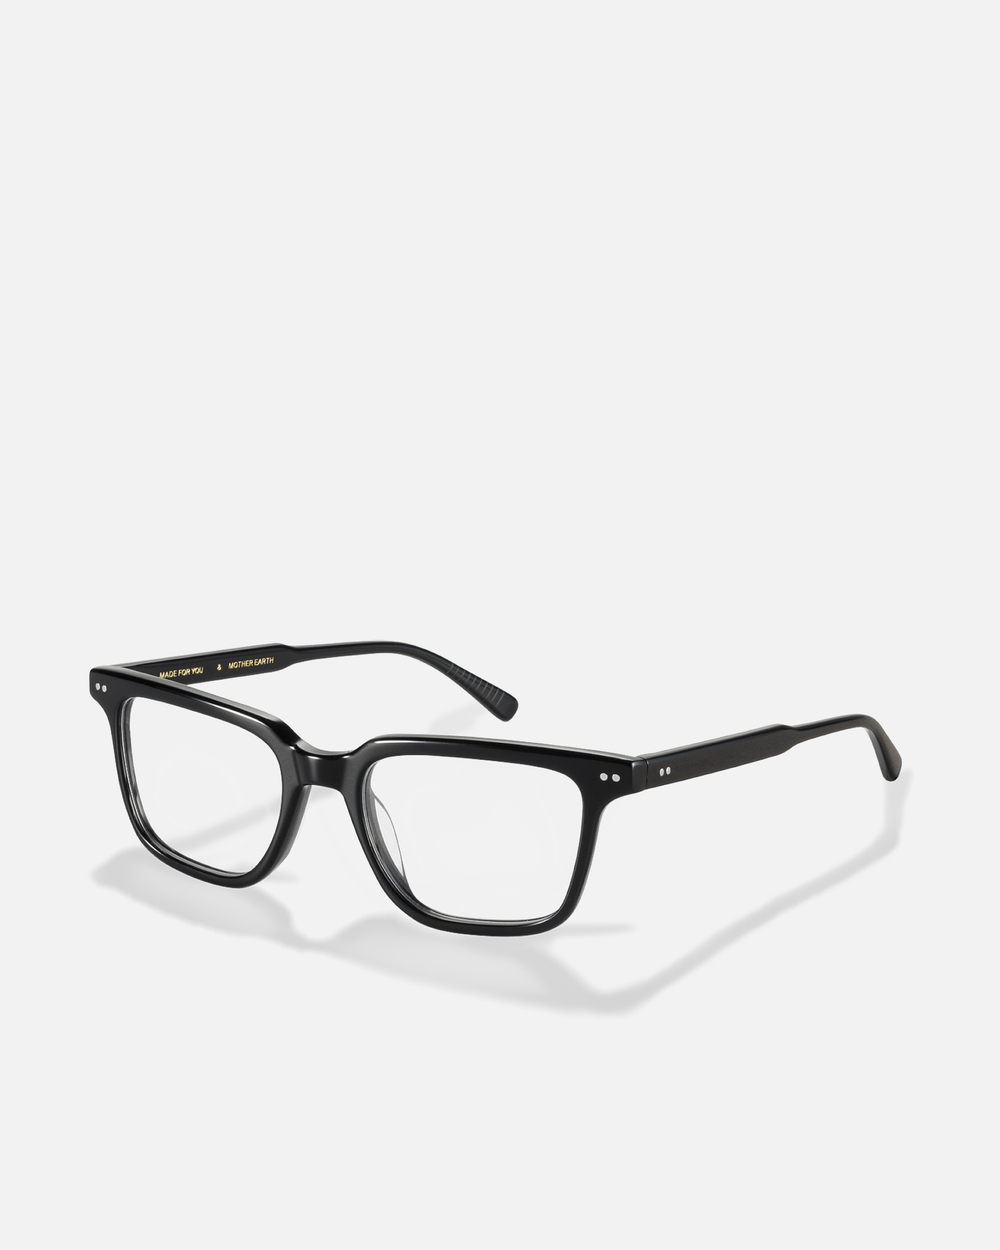 PEPINO Bio-Acetate Square Frame Sunglasses for Men & Women | Black | Sunnies Collection | OLLU